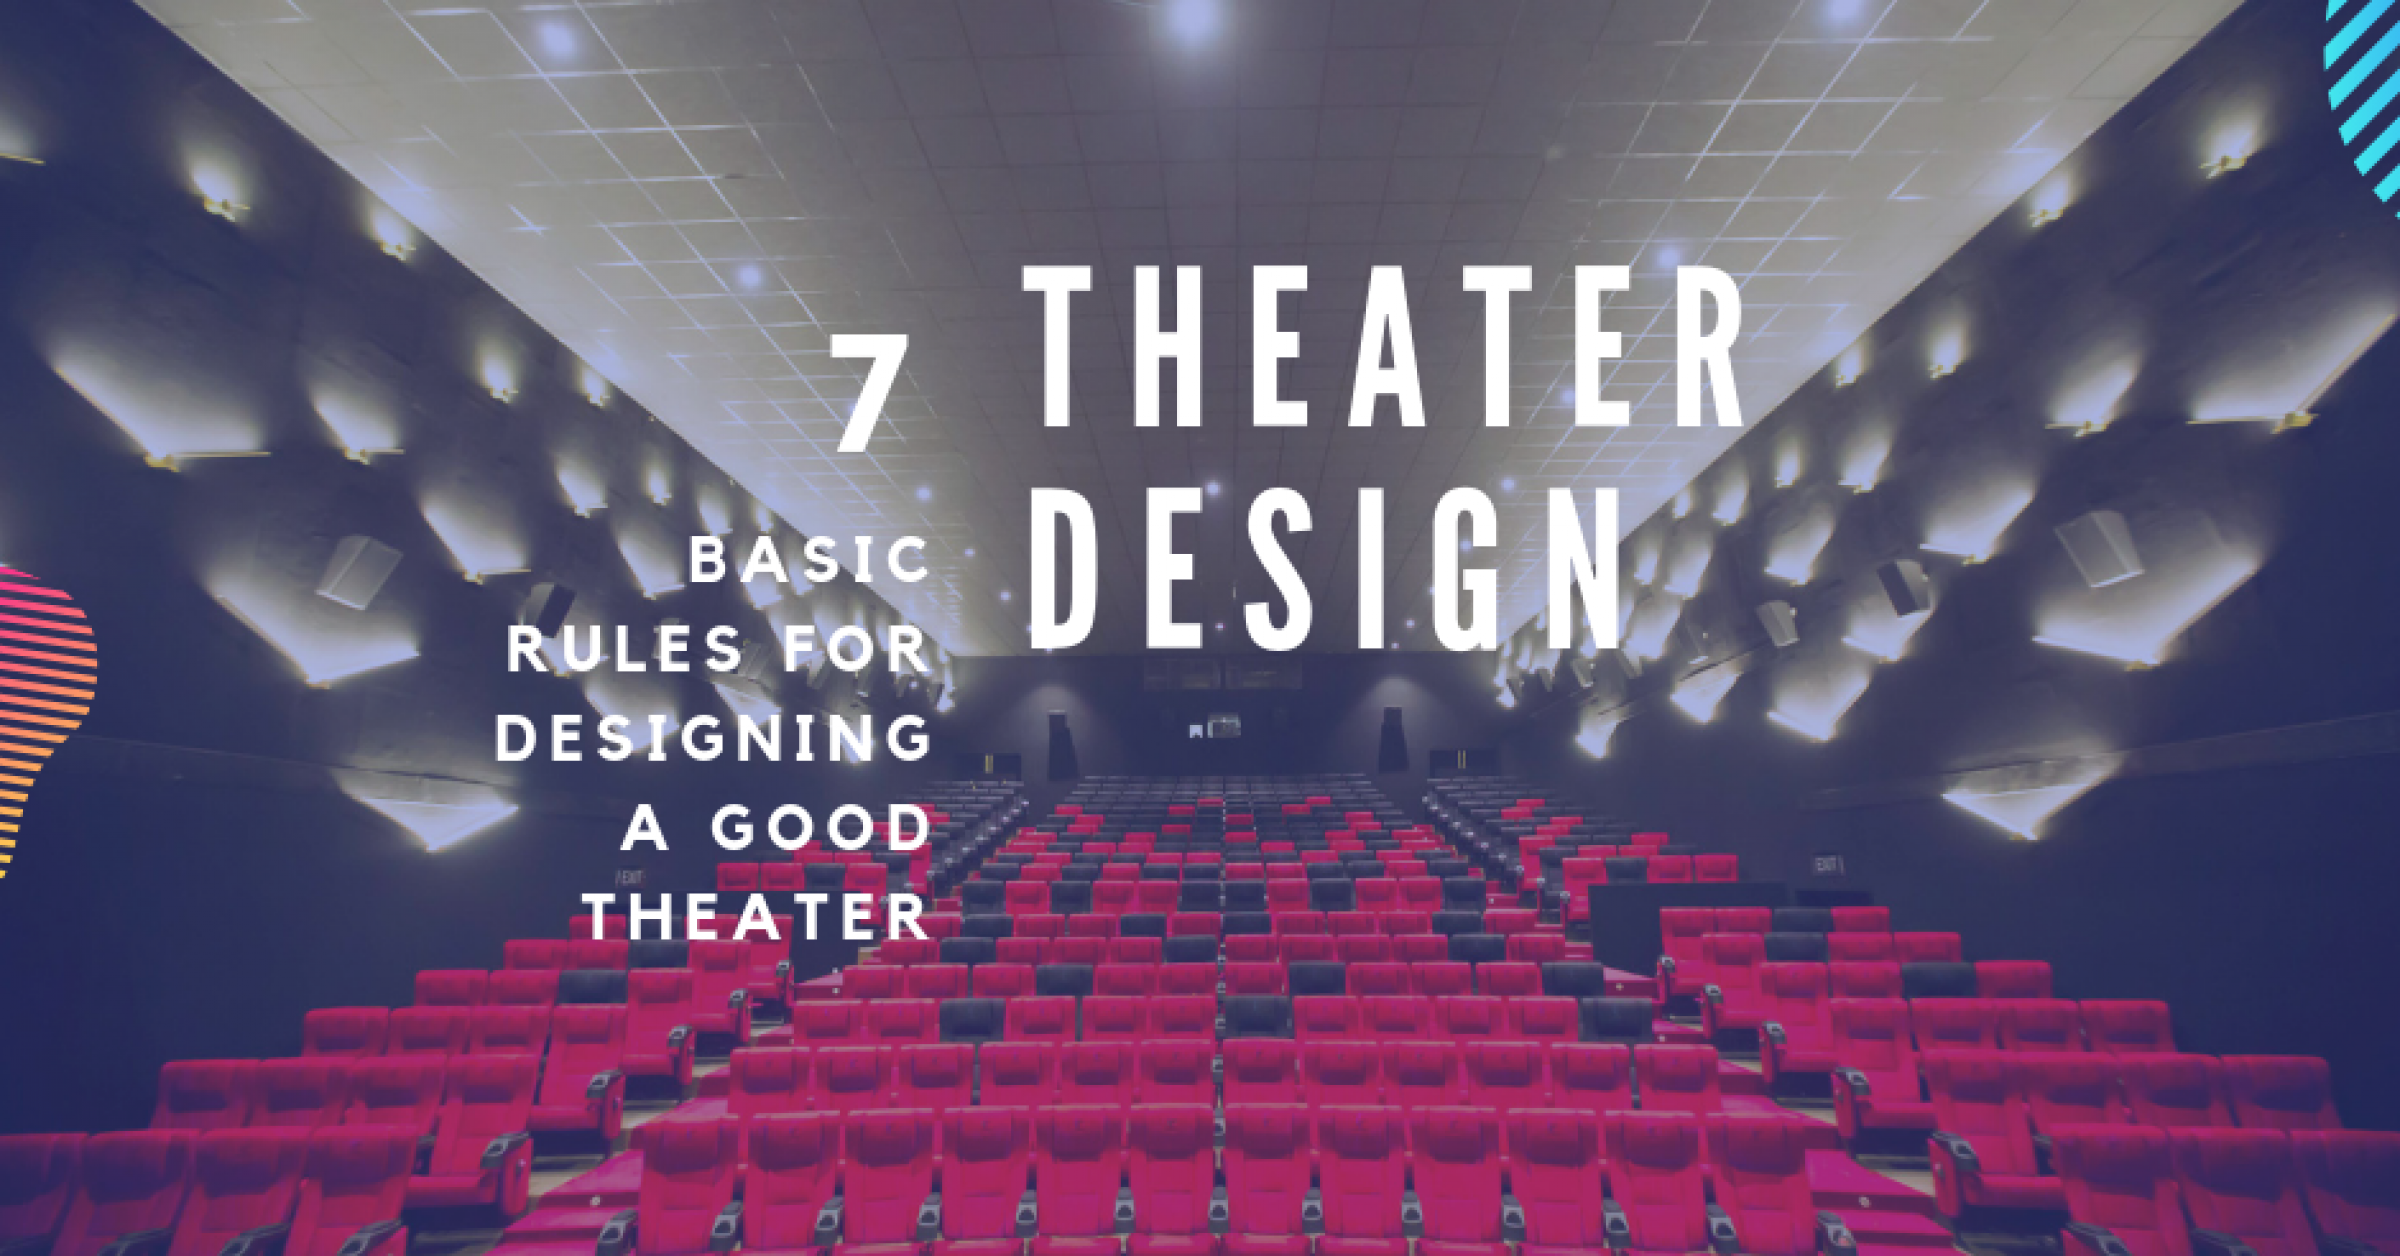 theatre stage design infographic